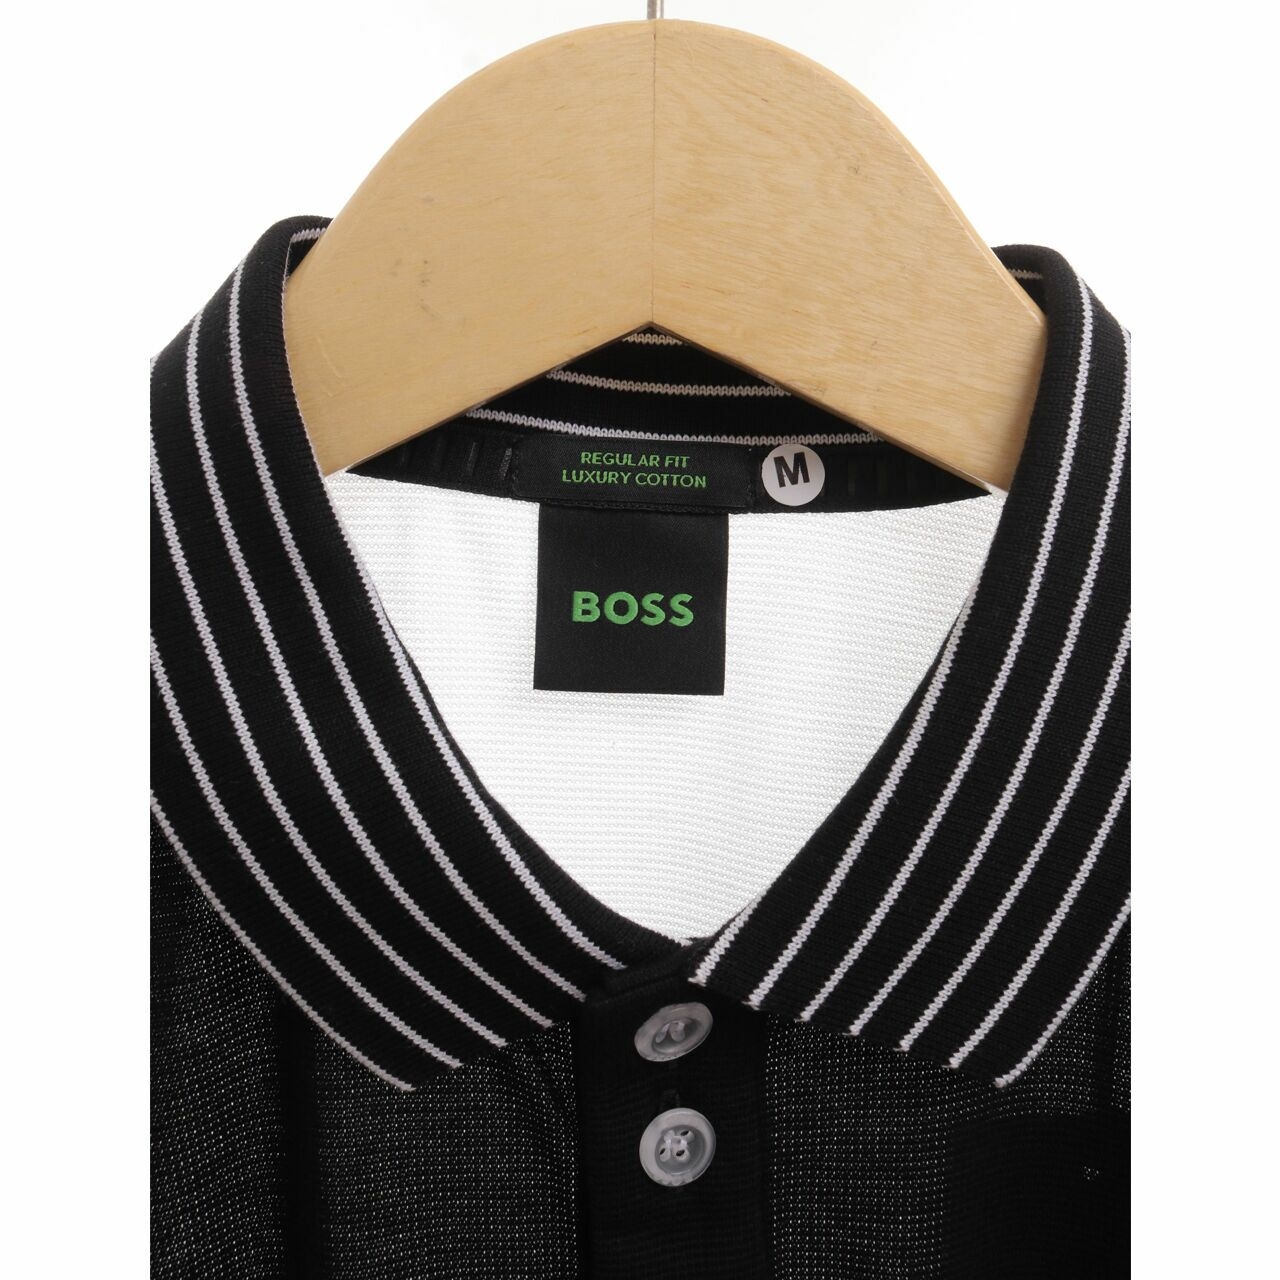 Hugo Boss Paddy Atheleisure Black/White Luxury Cotton Shirt M